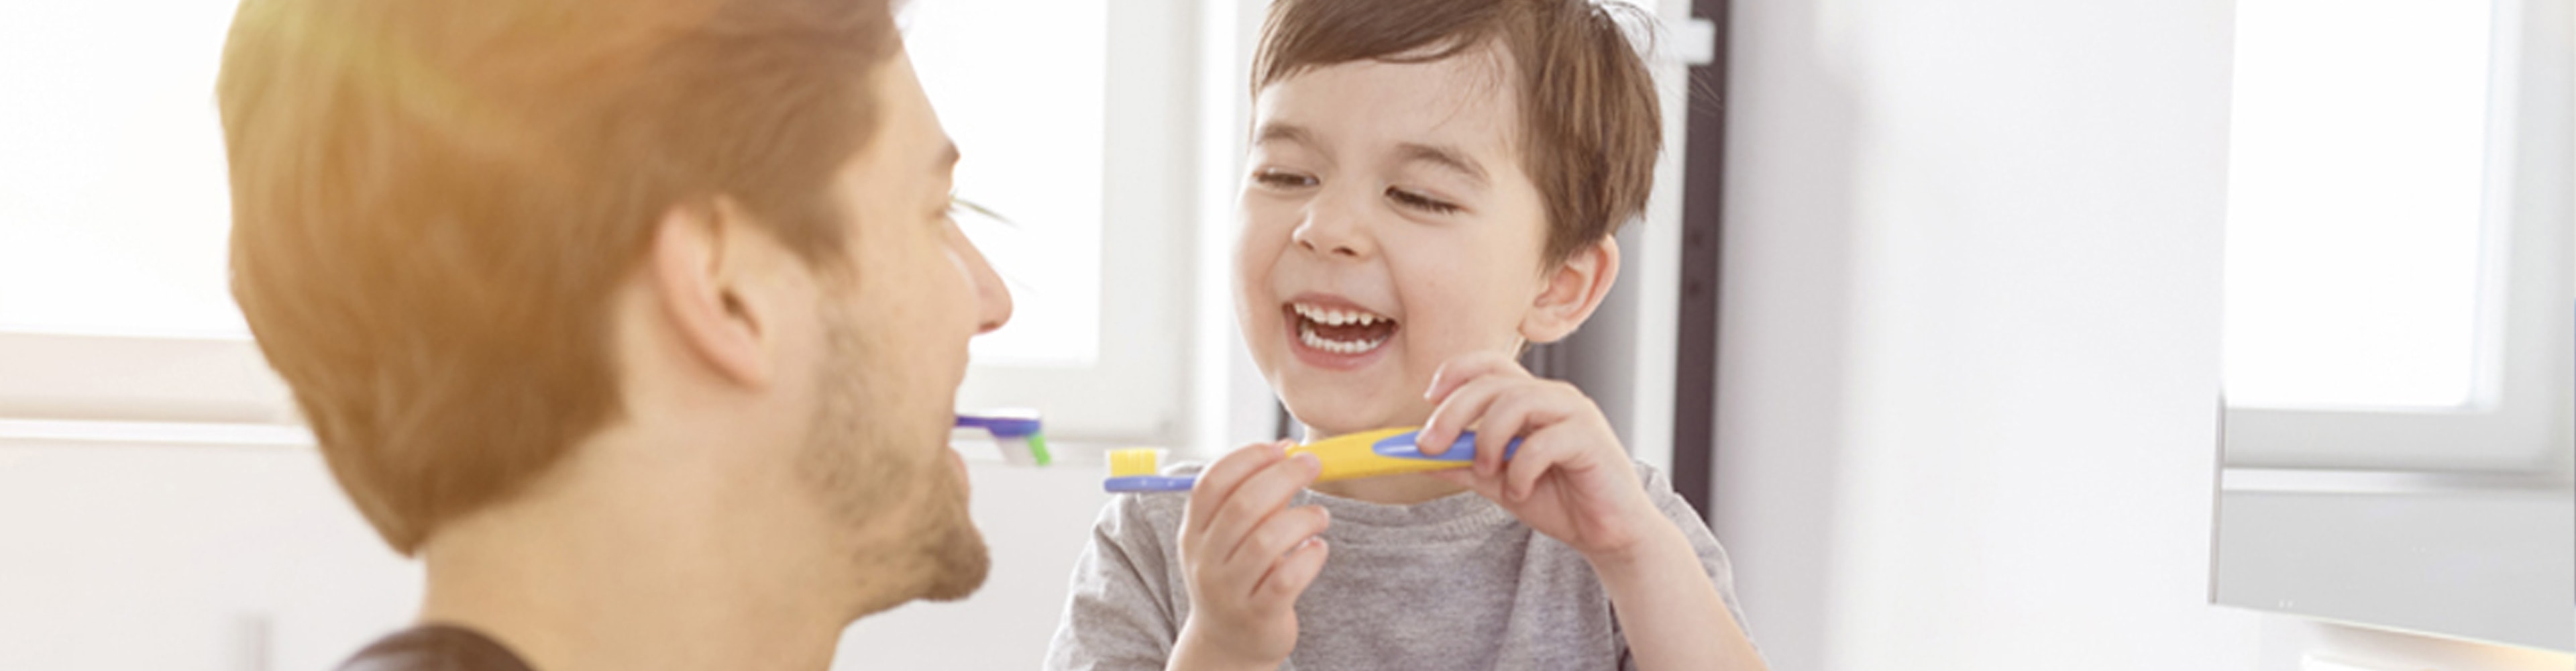 Comment inciter ses enfants à se brosser les dents?